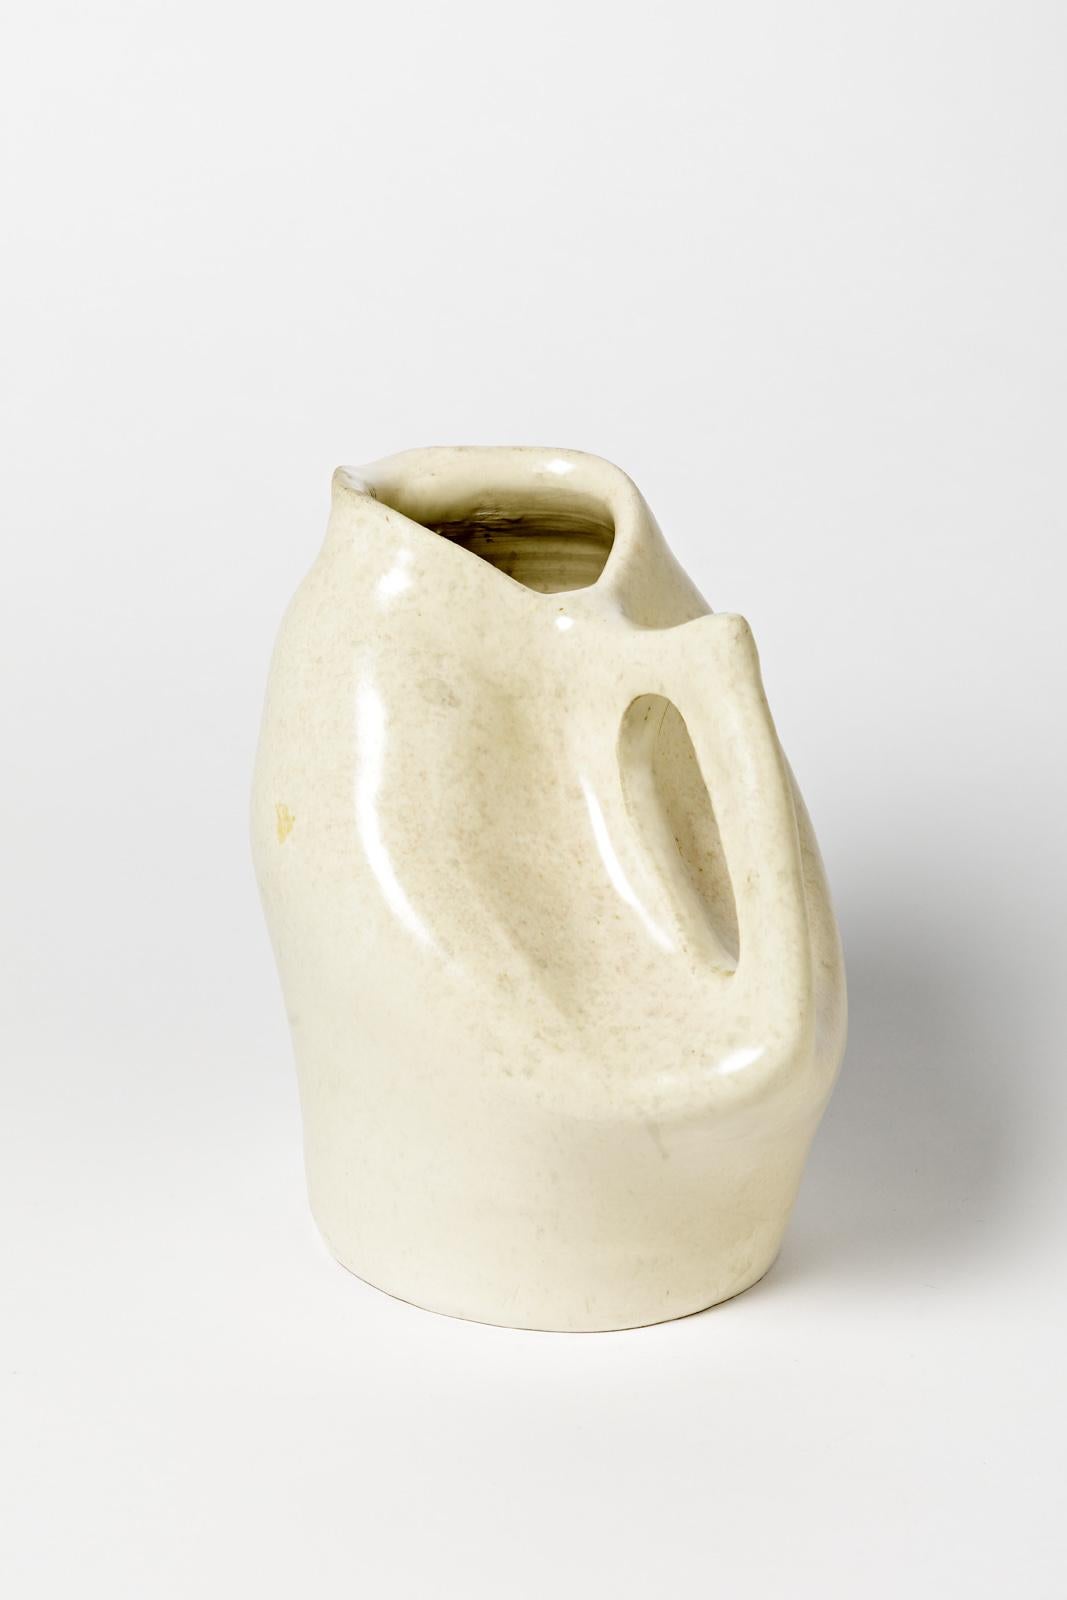 French White Freeform Bird Ceramic Pitcher Mid-20th Century Design For Sale